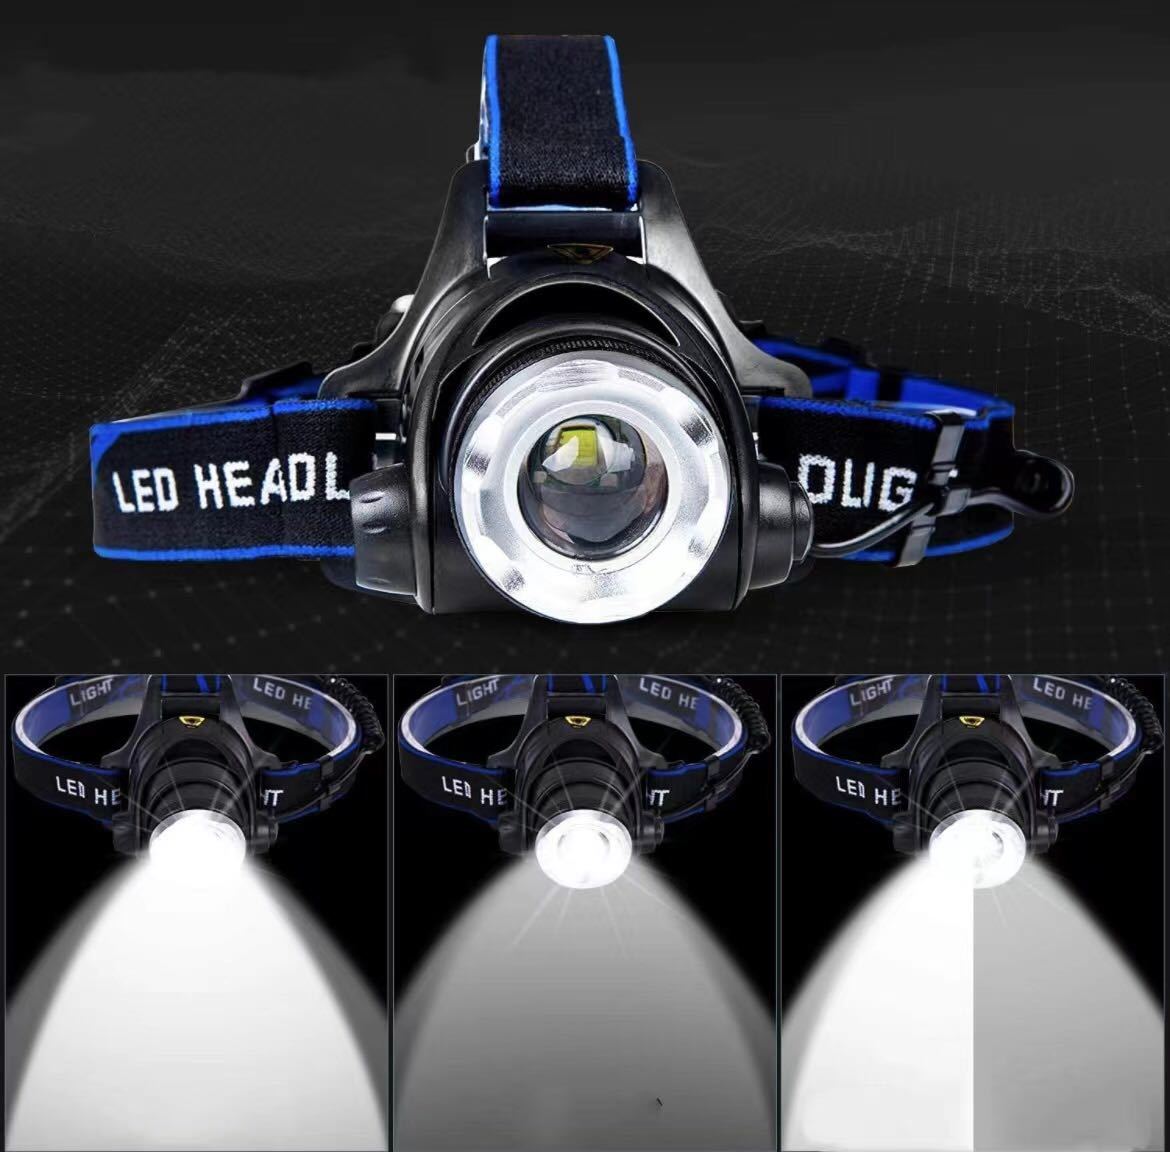 LED ヘッドライト 超軽量 小型 3点灯モード 防水 ズーム機能 角度調整 2000ルーメン LEDヘッドライト